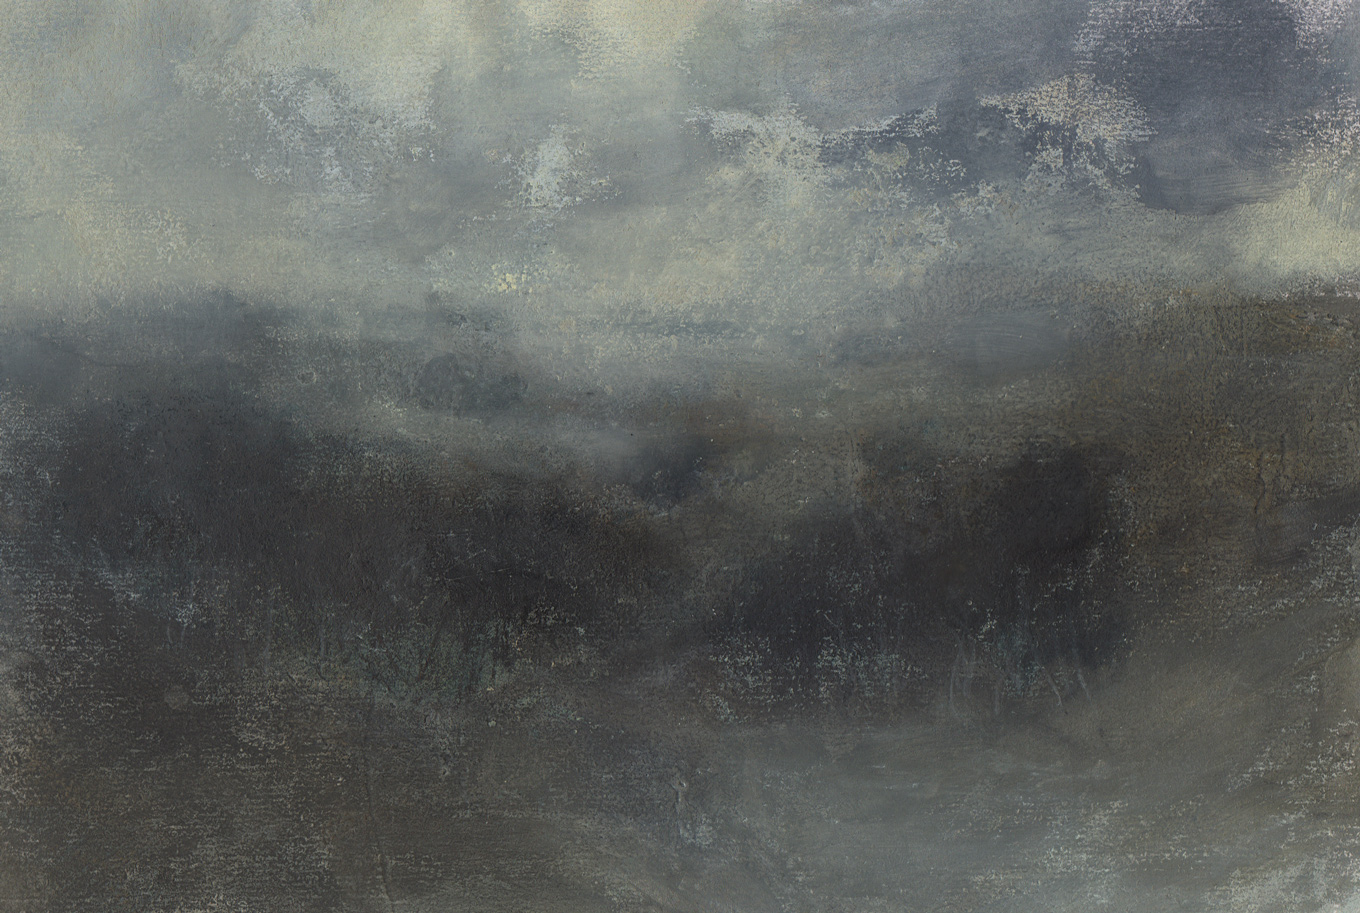 Nicholas Herbert, British Artist - Landscape L970, Sharpenhoe Series, Beneath the Escarpment, The Chiltern Hills, contemporary mixed media painting